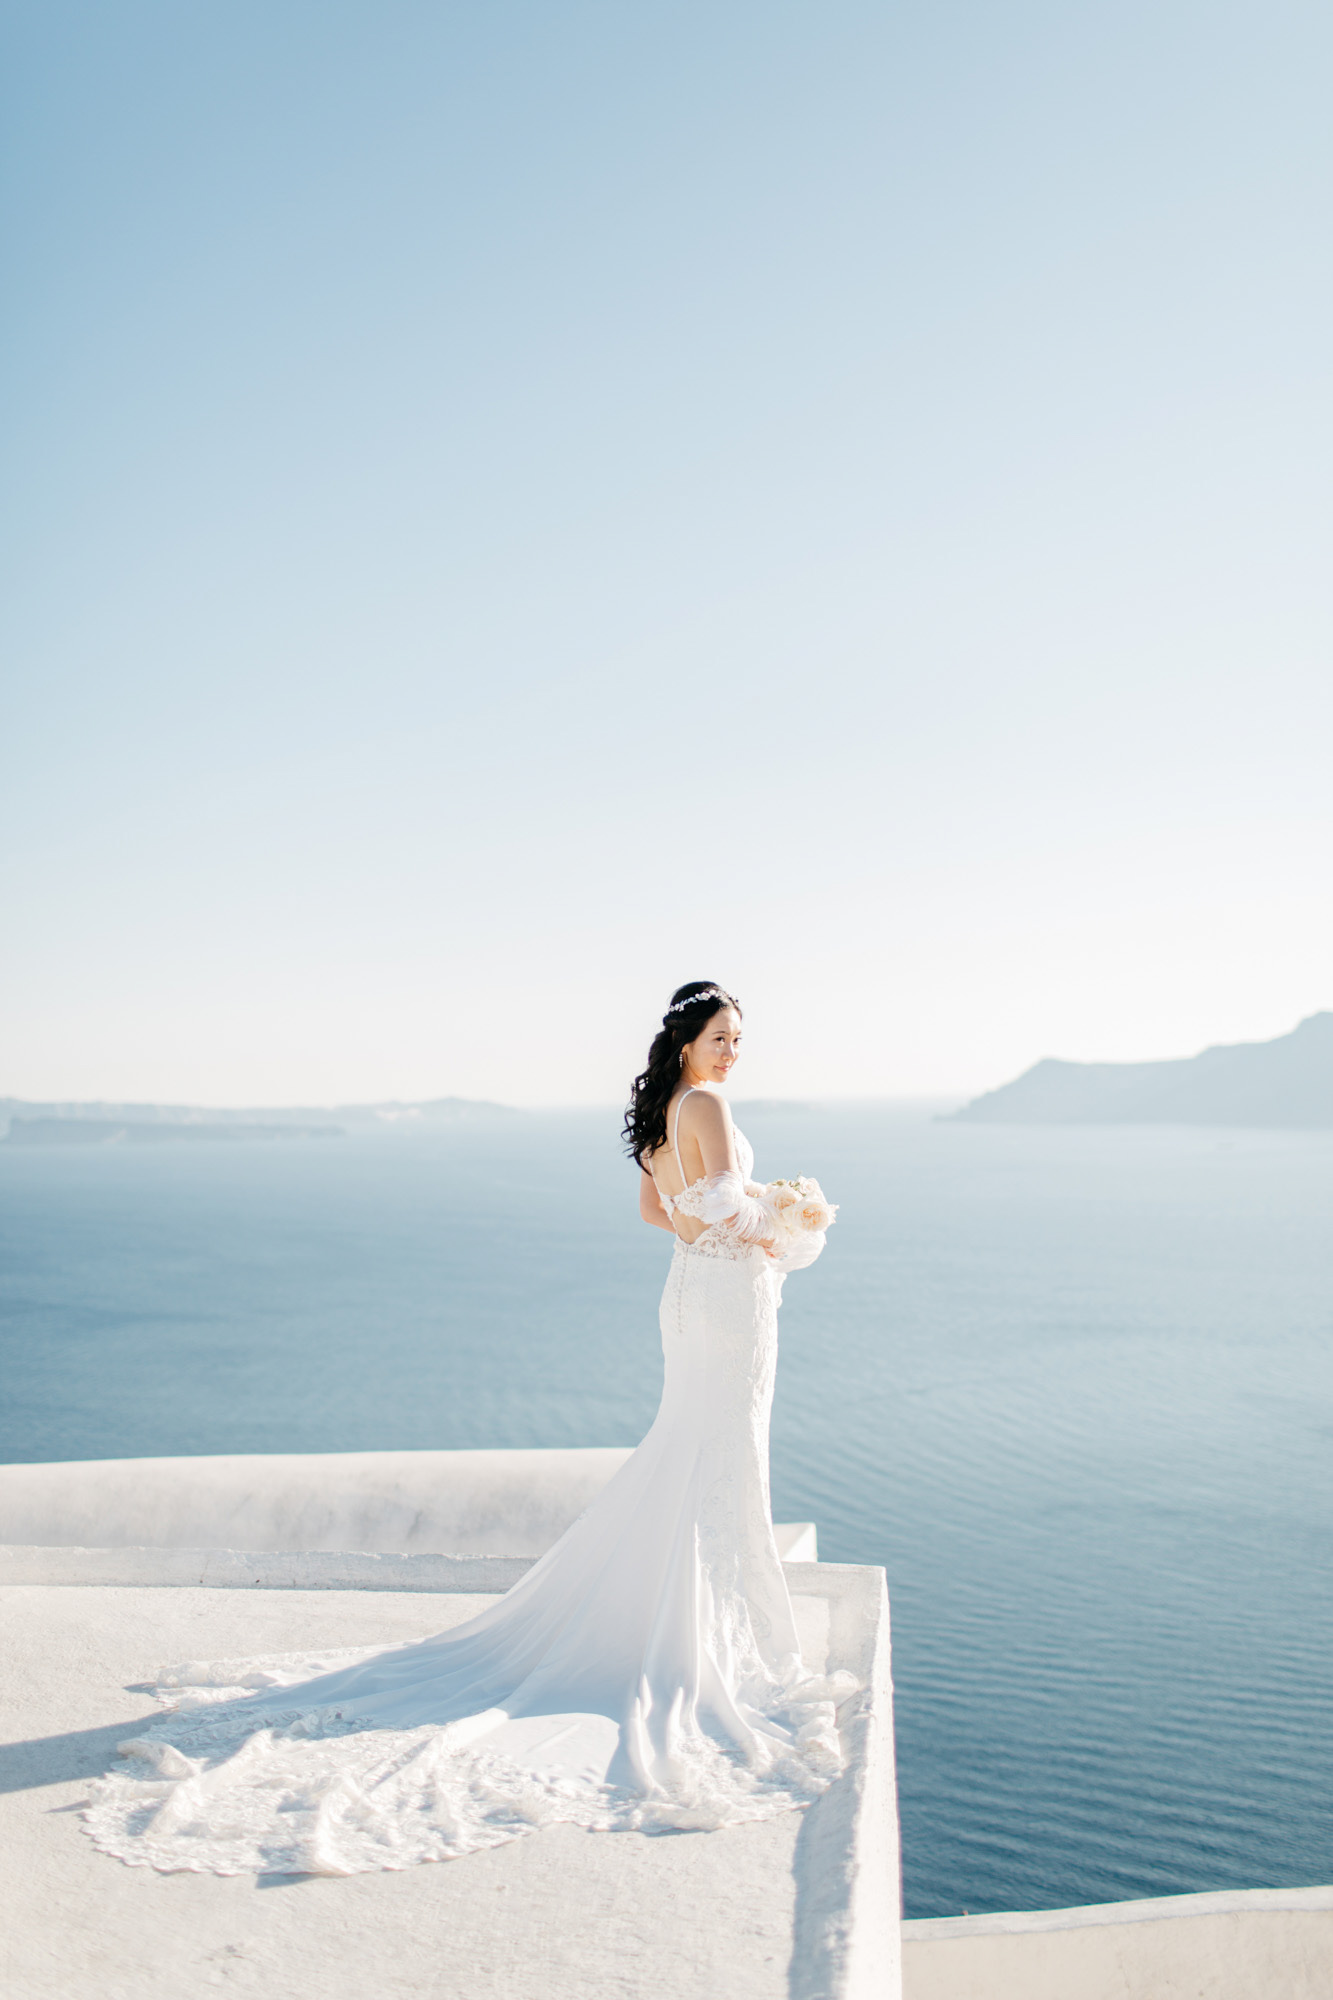 Classy destination wedding in Aenaon Villas in Oia Santorini Greece.